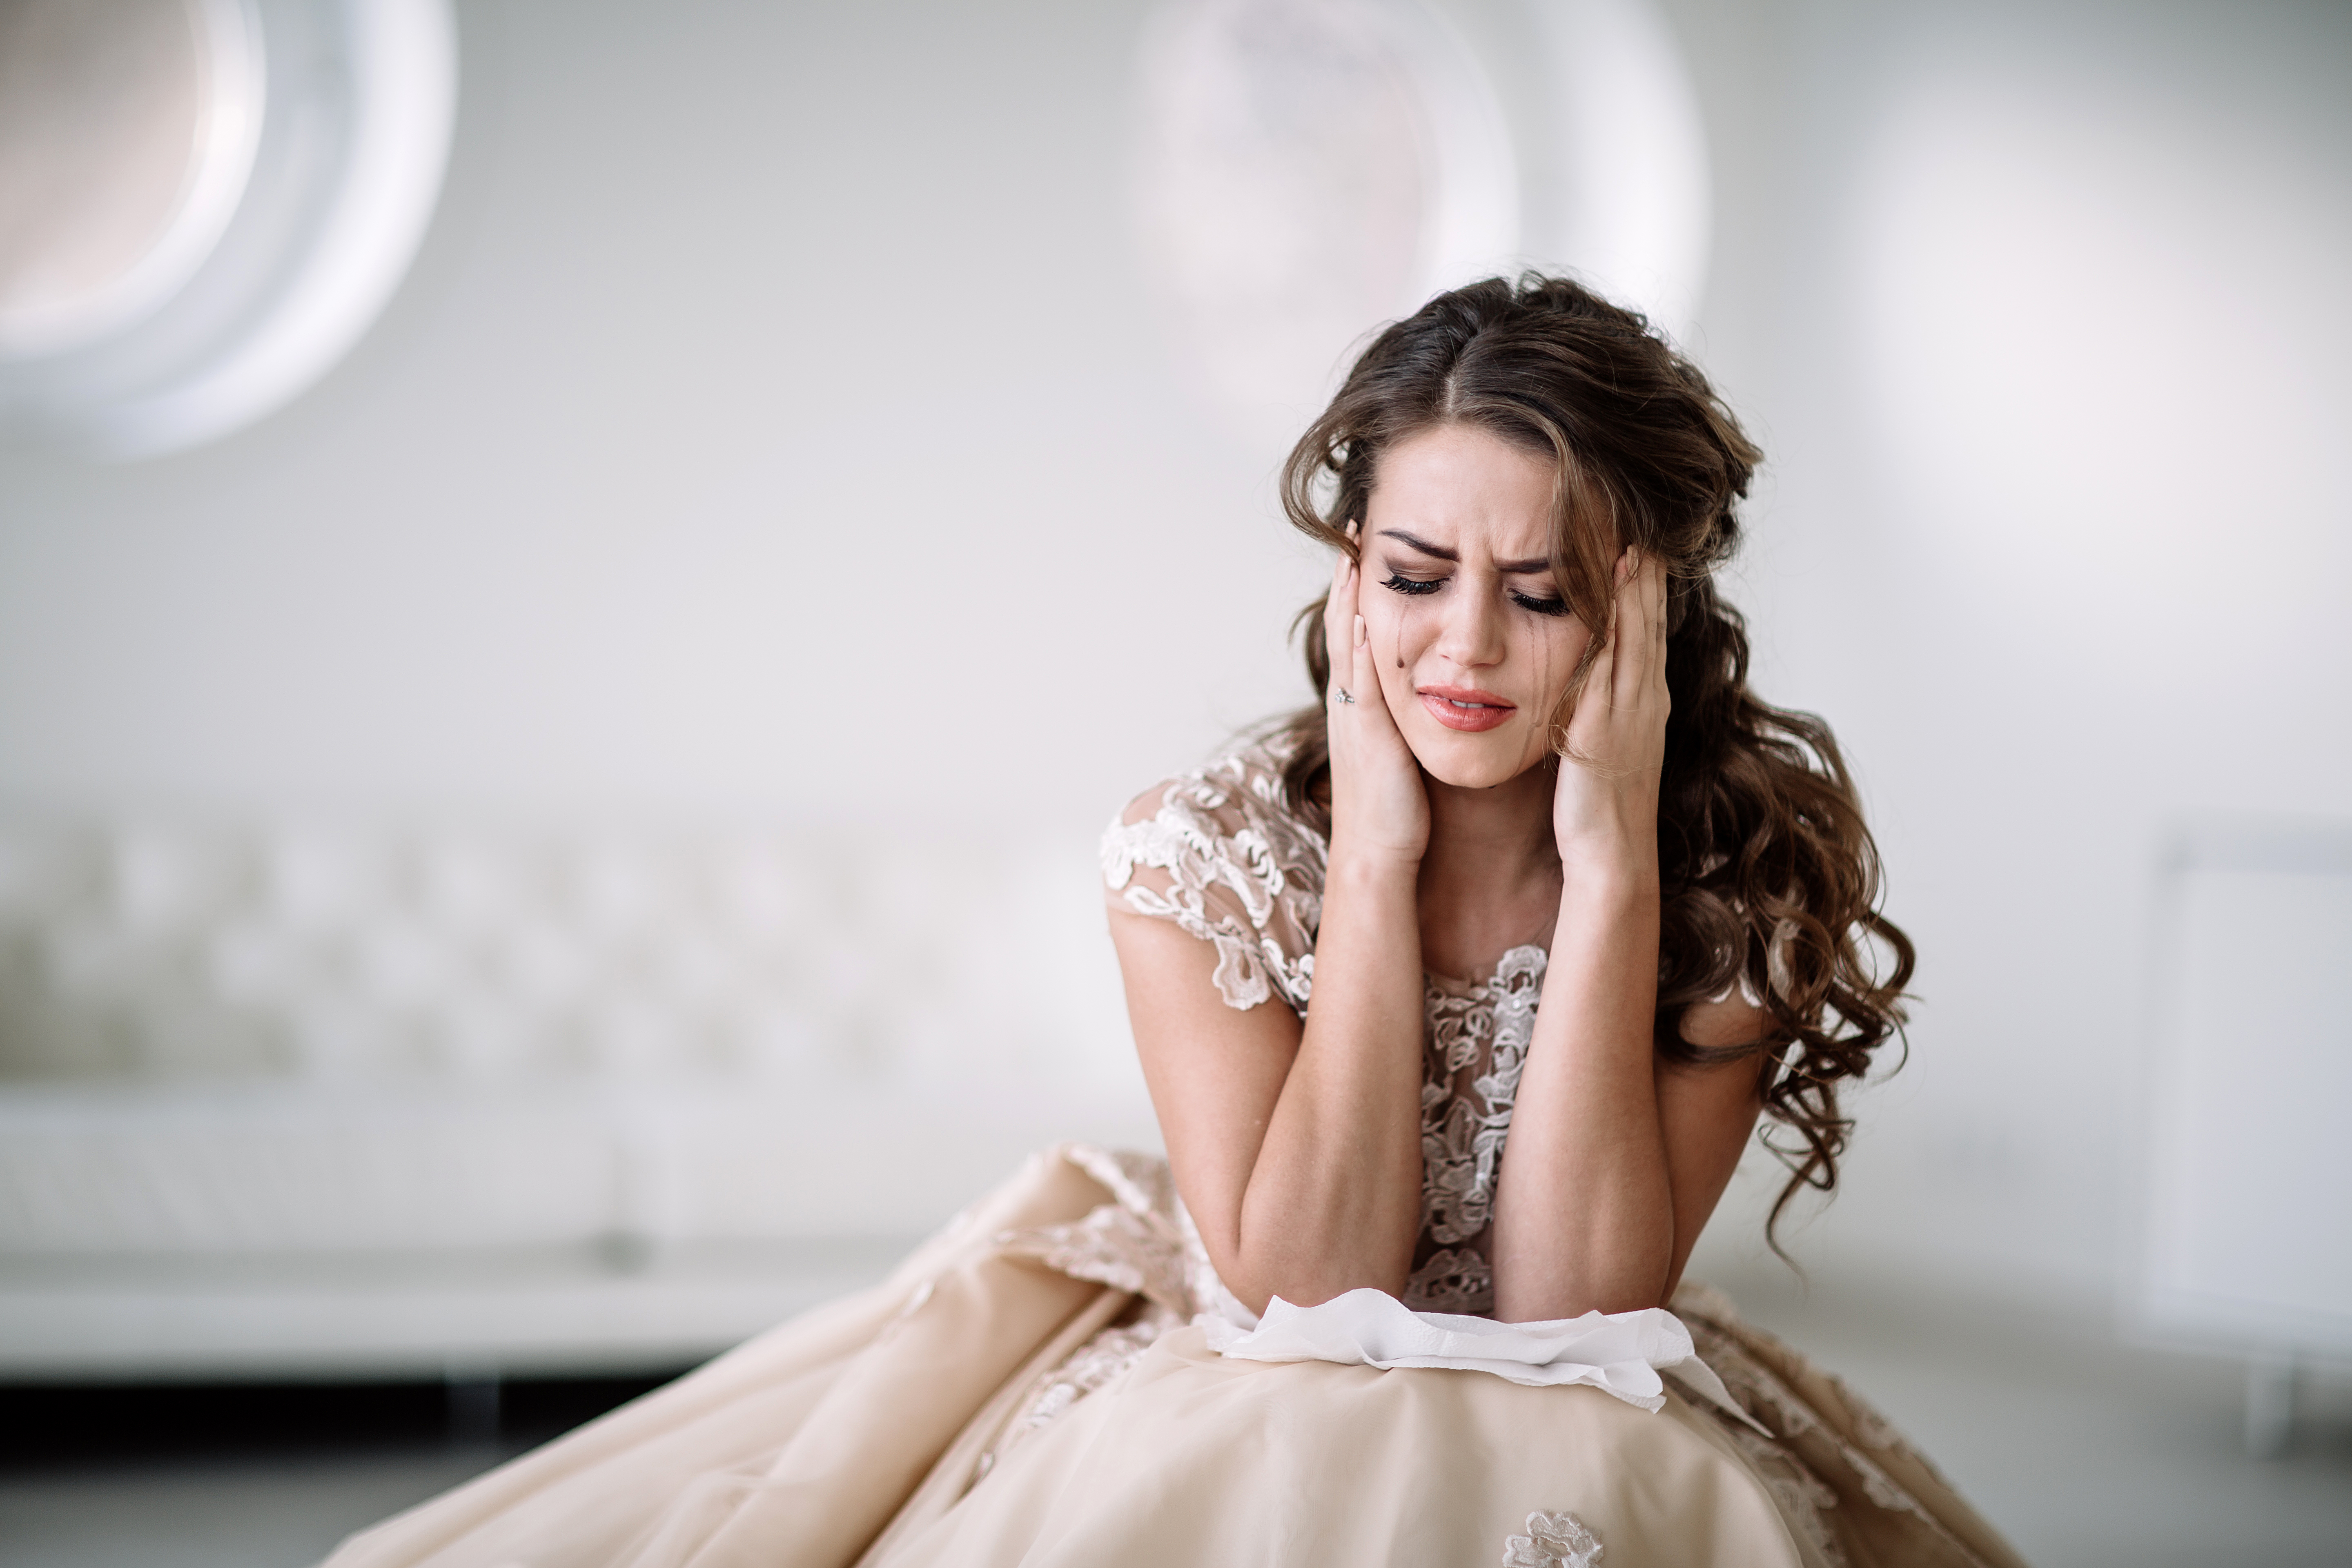 A stressed bride | Source: Shutterstock